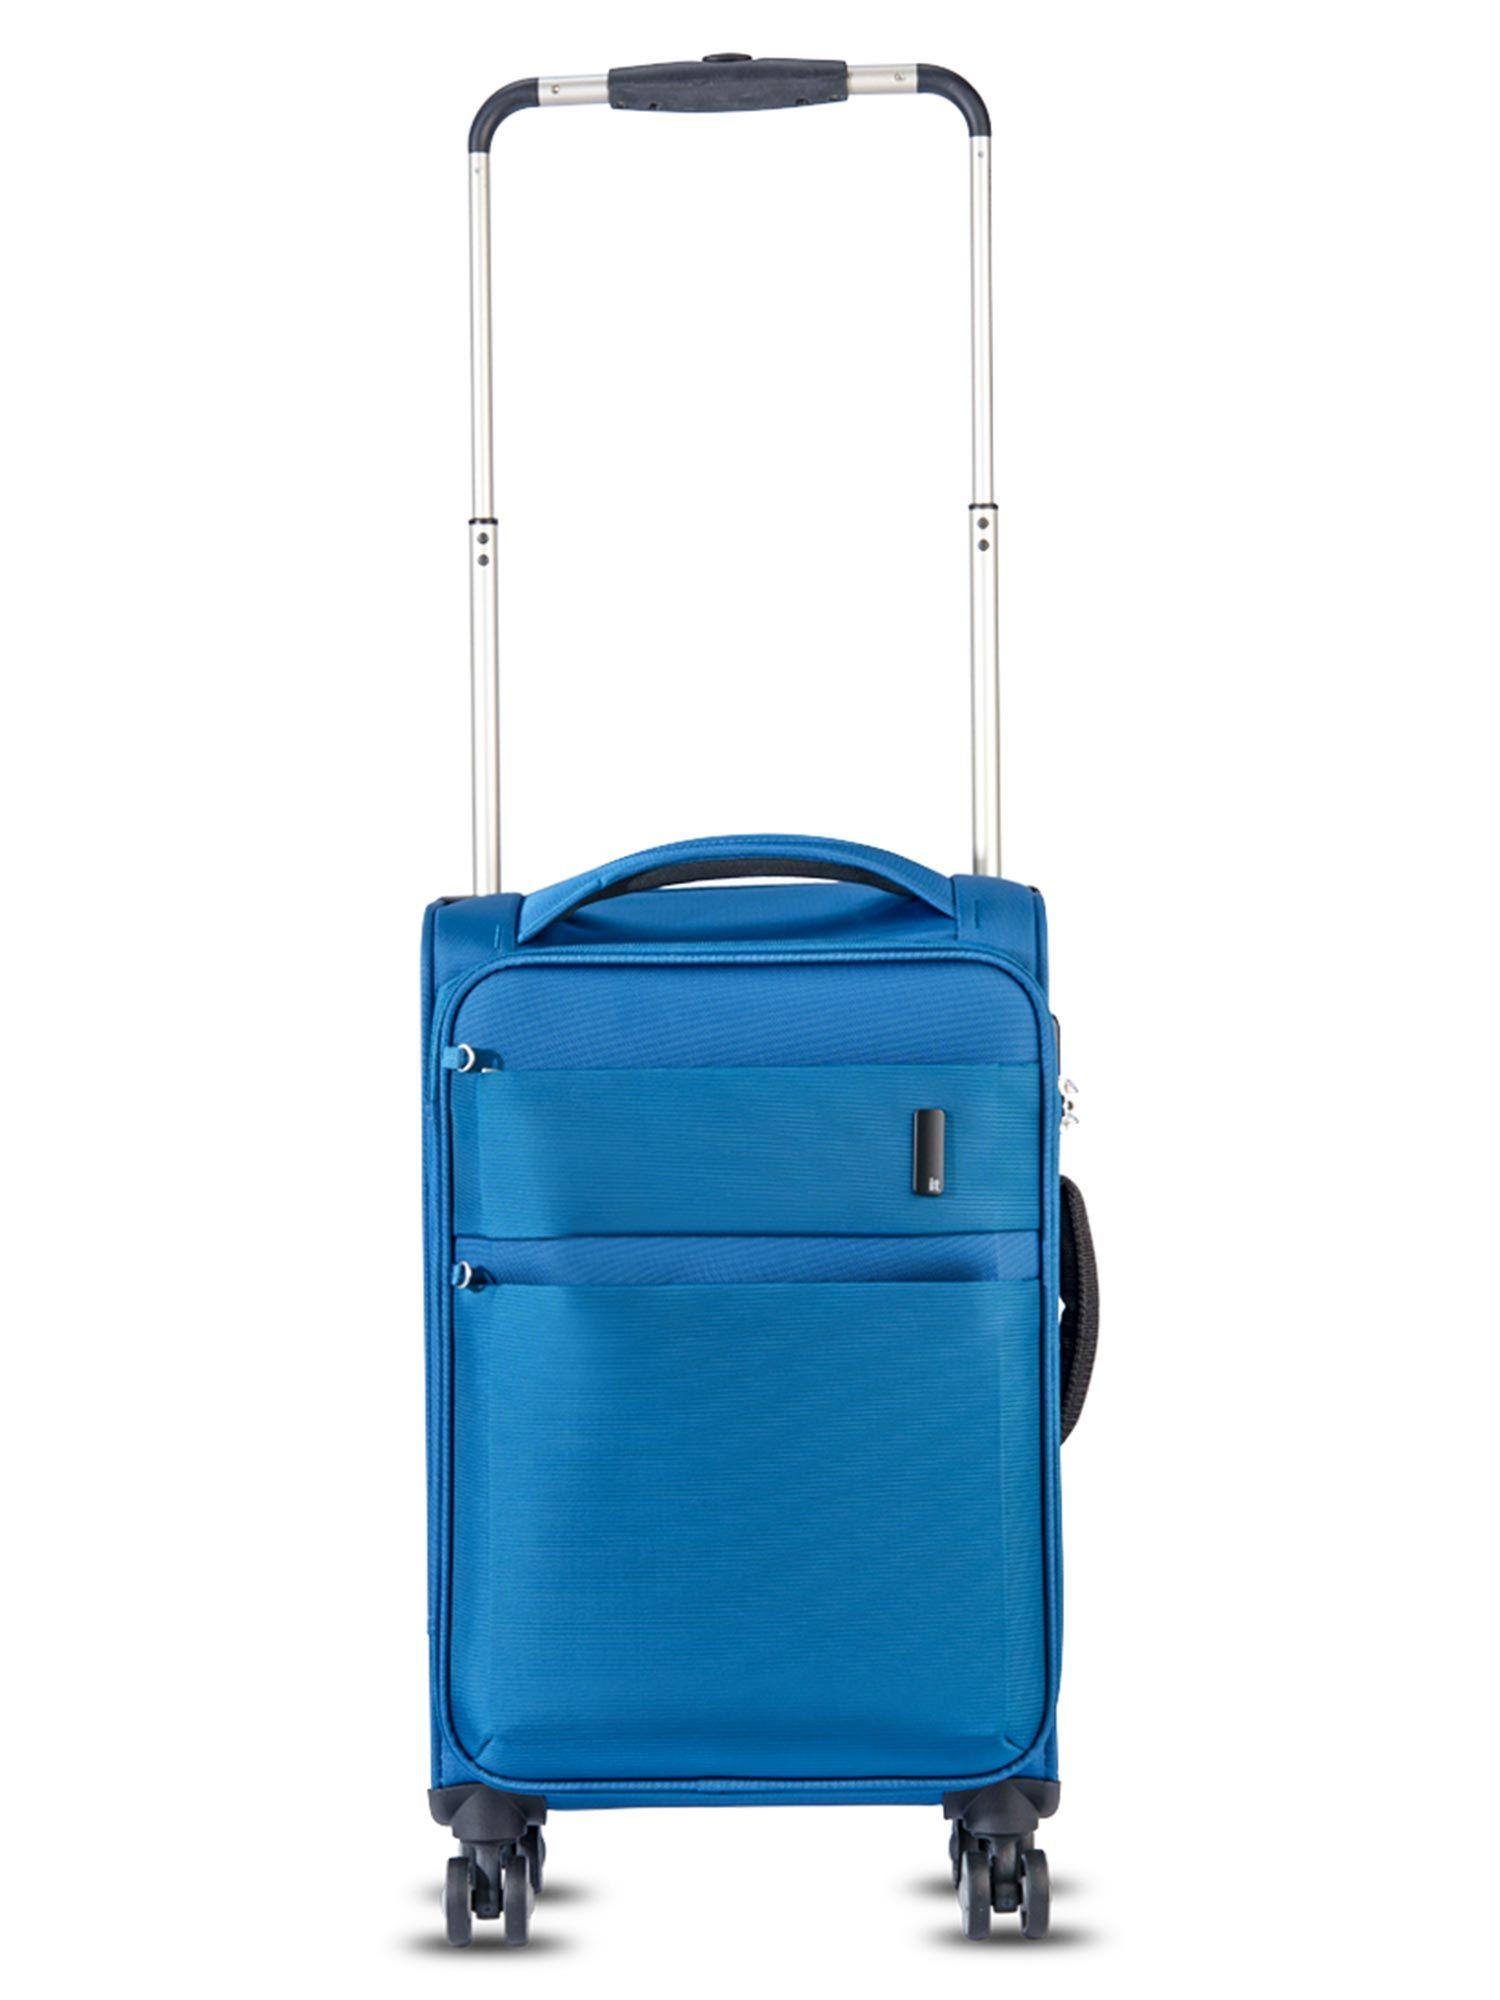 world's-lightest-bag-debonair-trolley-bag-two-tone-blue